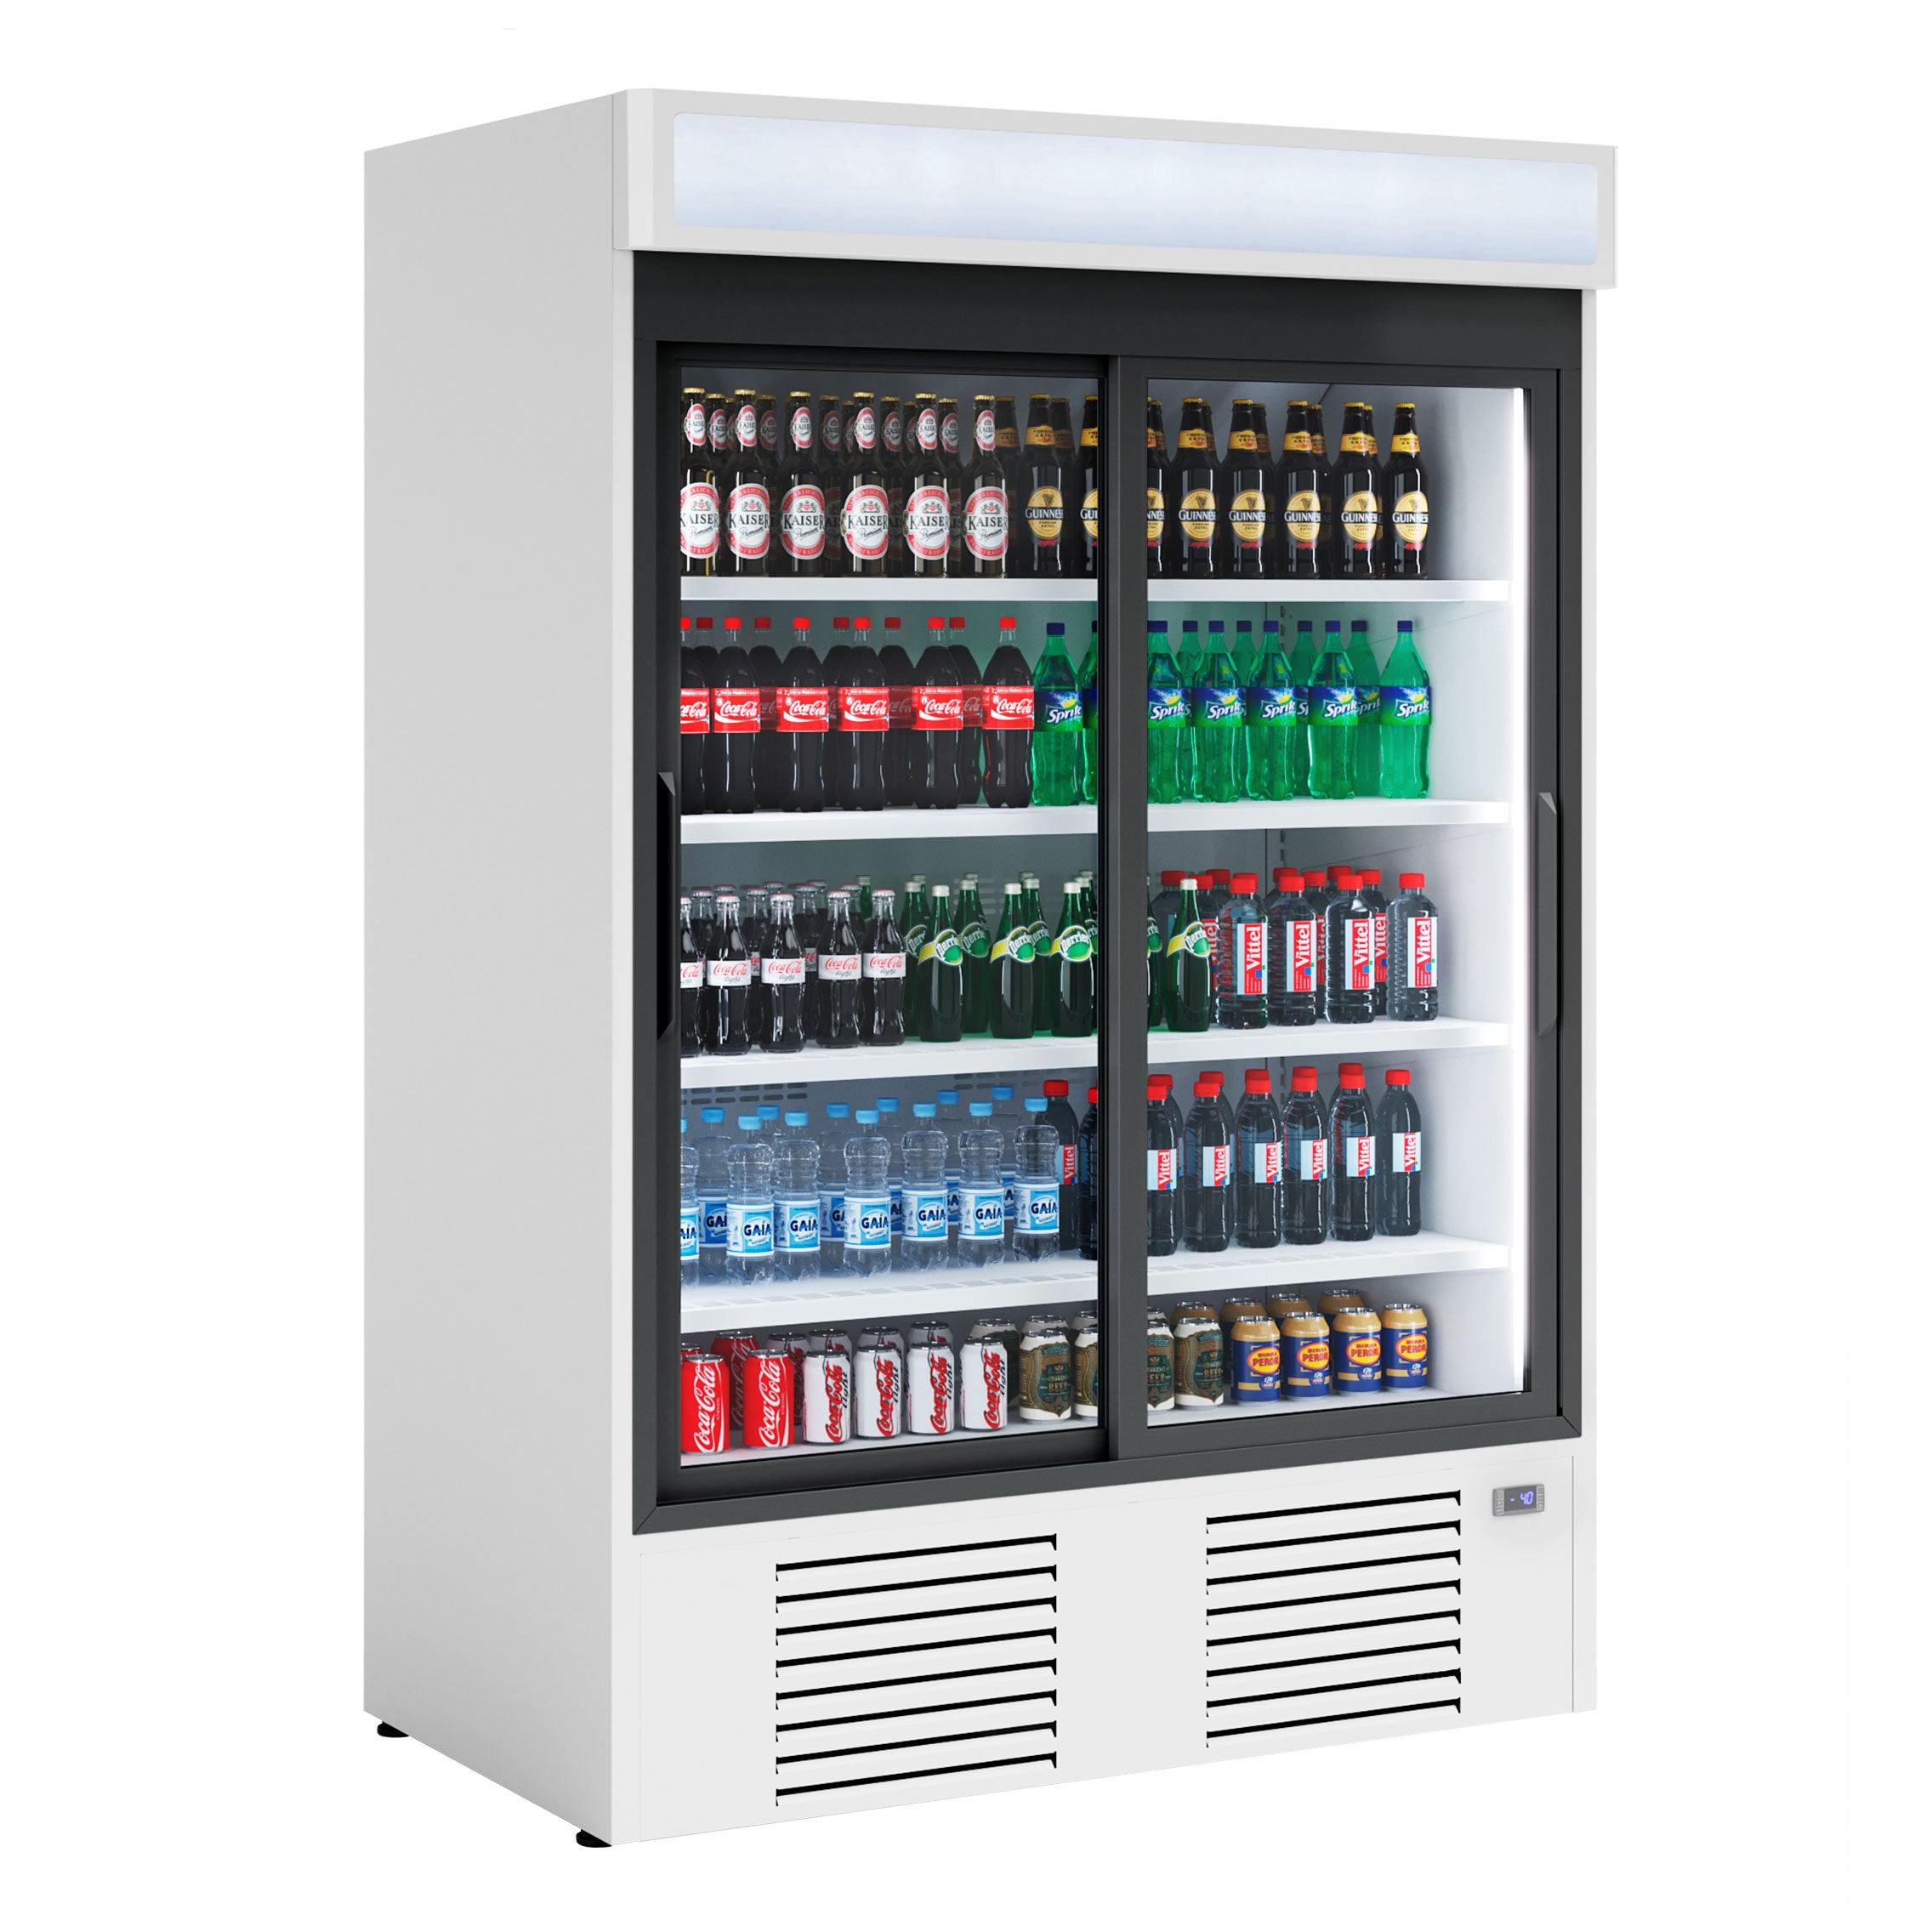 Хладилник за напитки 1300 литра - с 2 врати